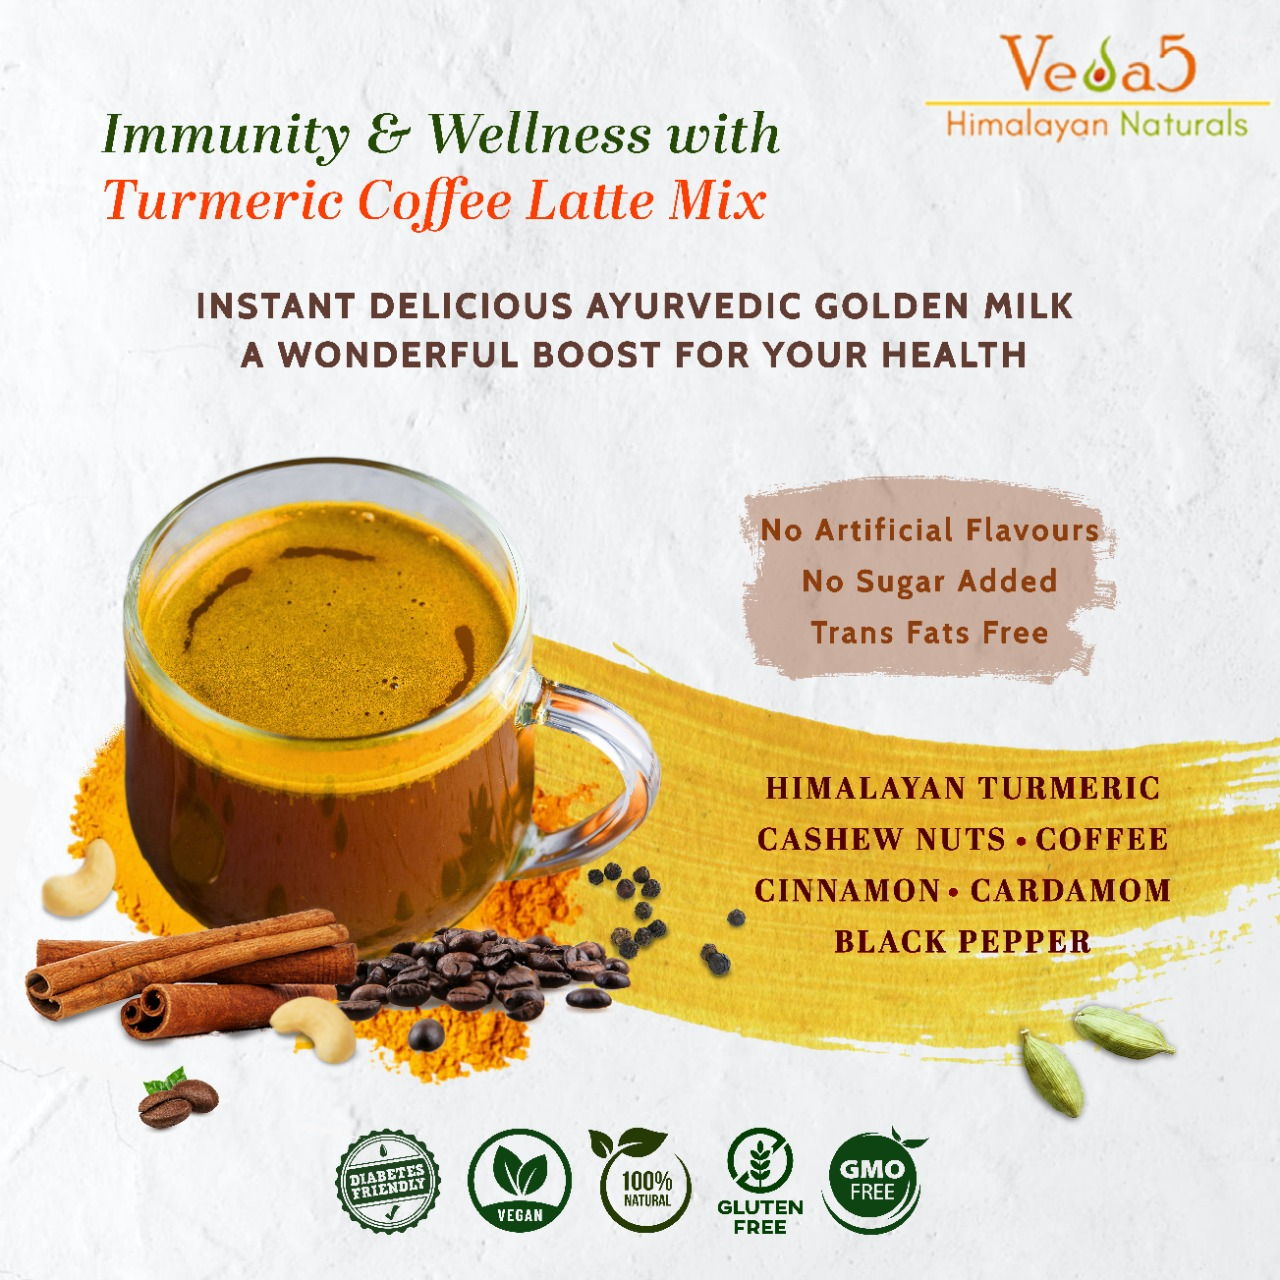 Turmeric Coffee Latte Mix Ingredients Veda5 Himalayan Naturals